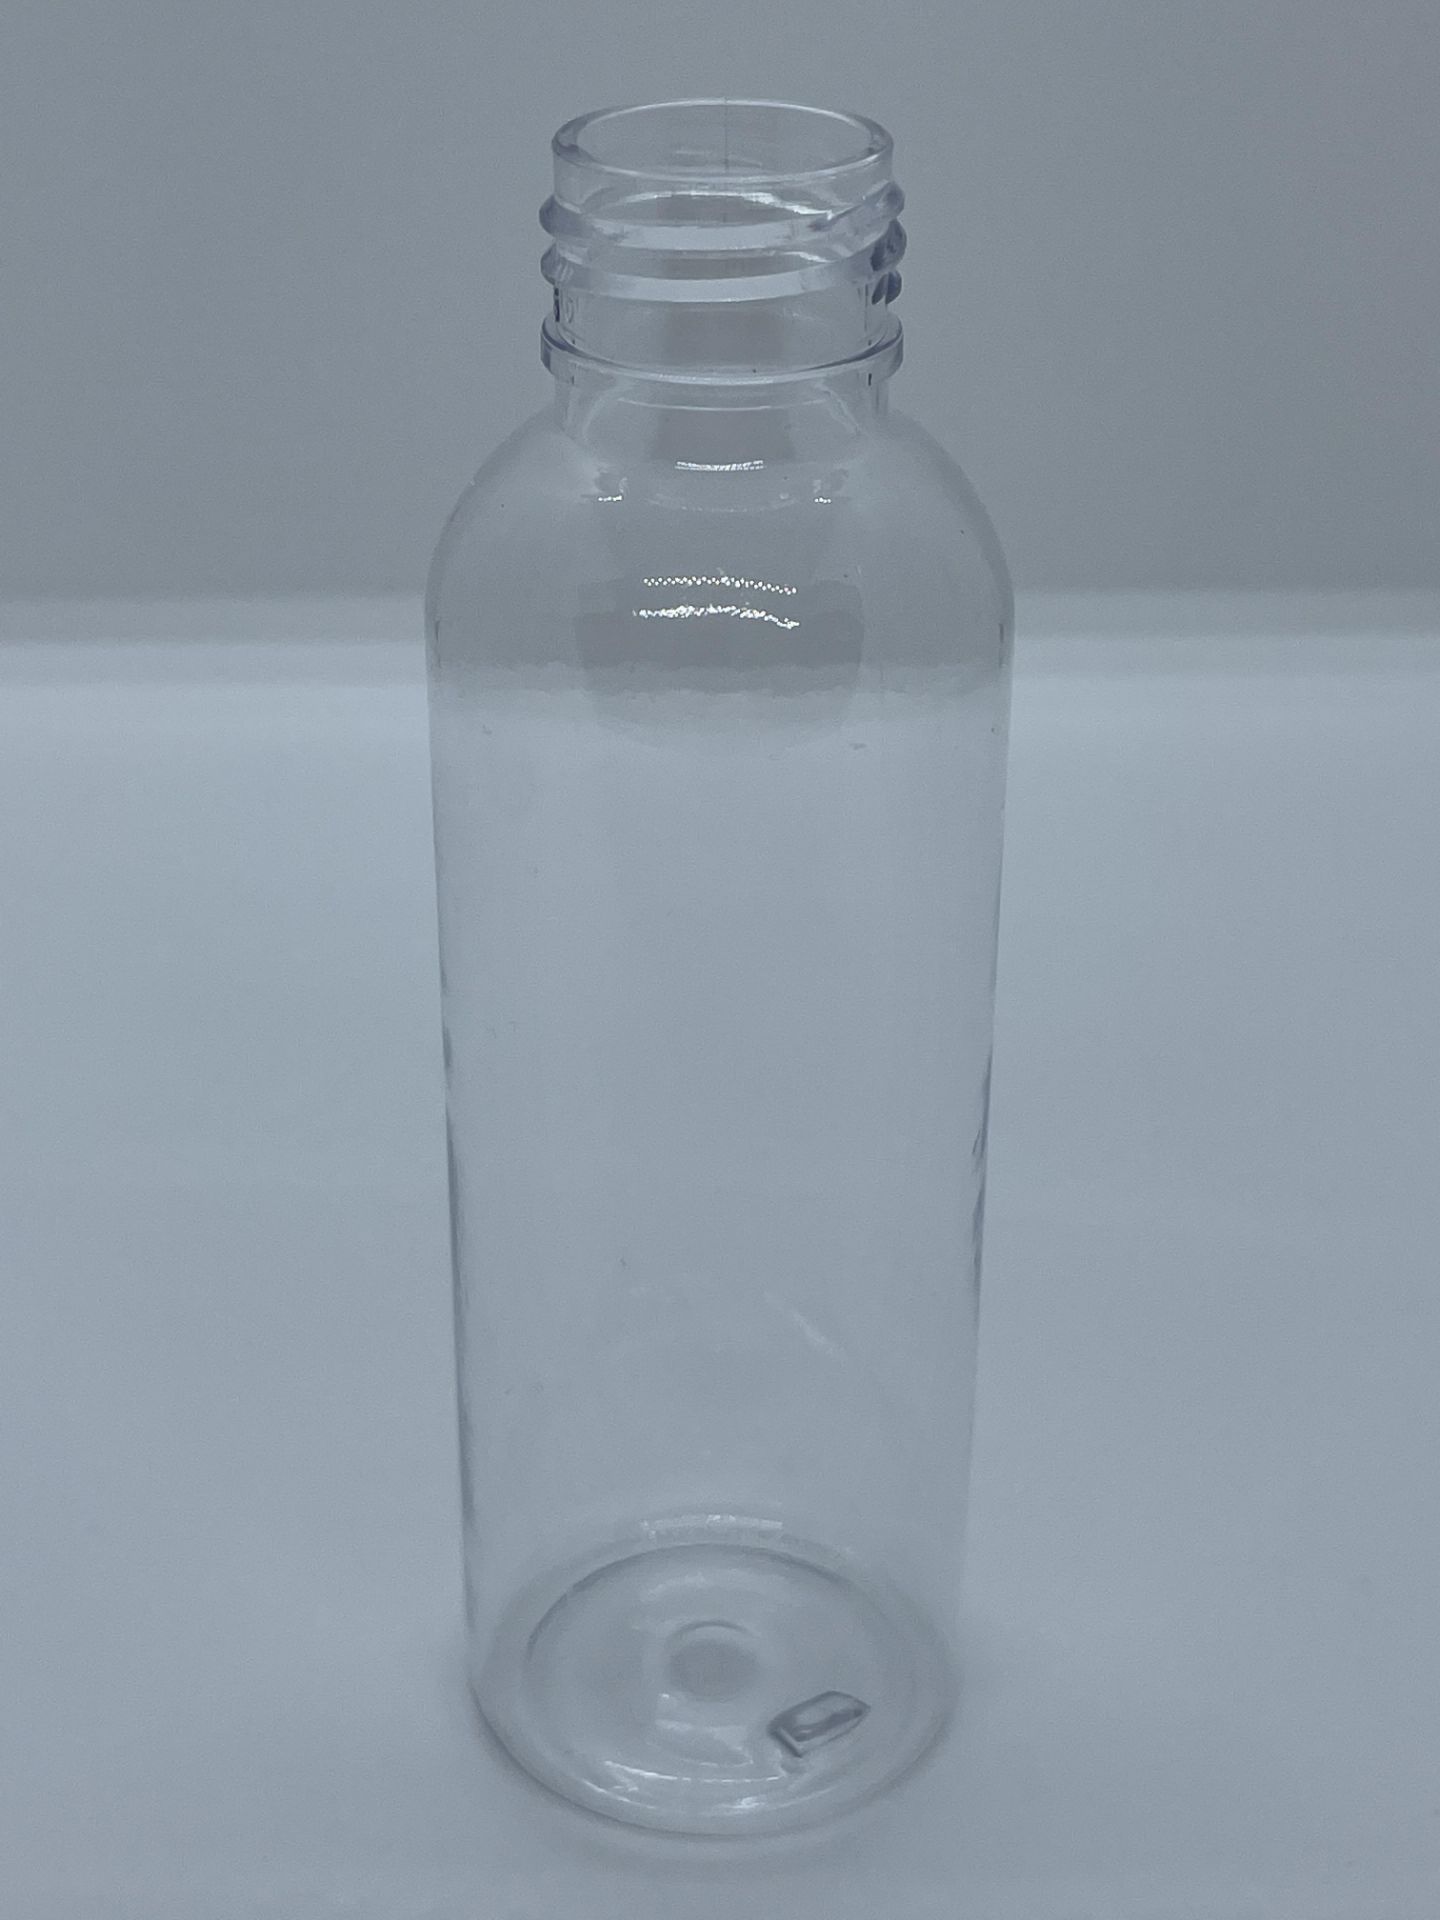 96,000 - Clear Plastic Bullet 4 oz Empty Bottles, 24-410 Threading Neck, 5" Tall, 1 5/8" Diameter - Image 2 of 4